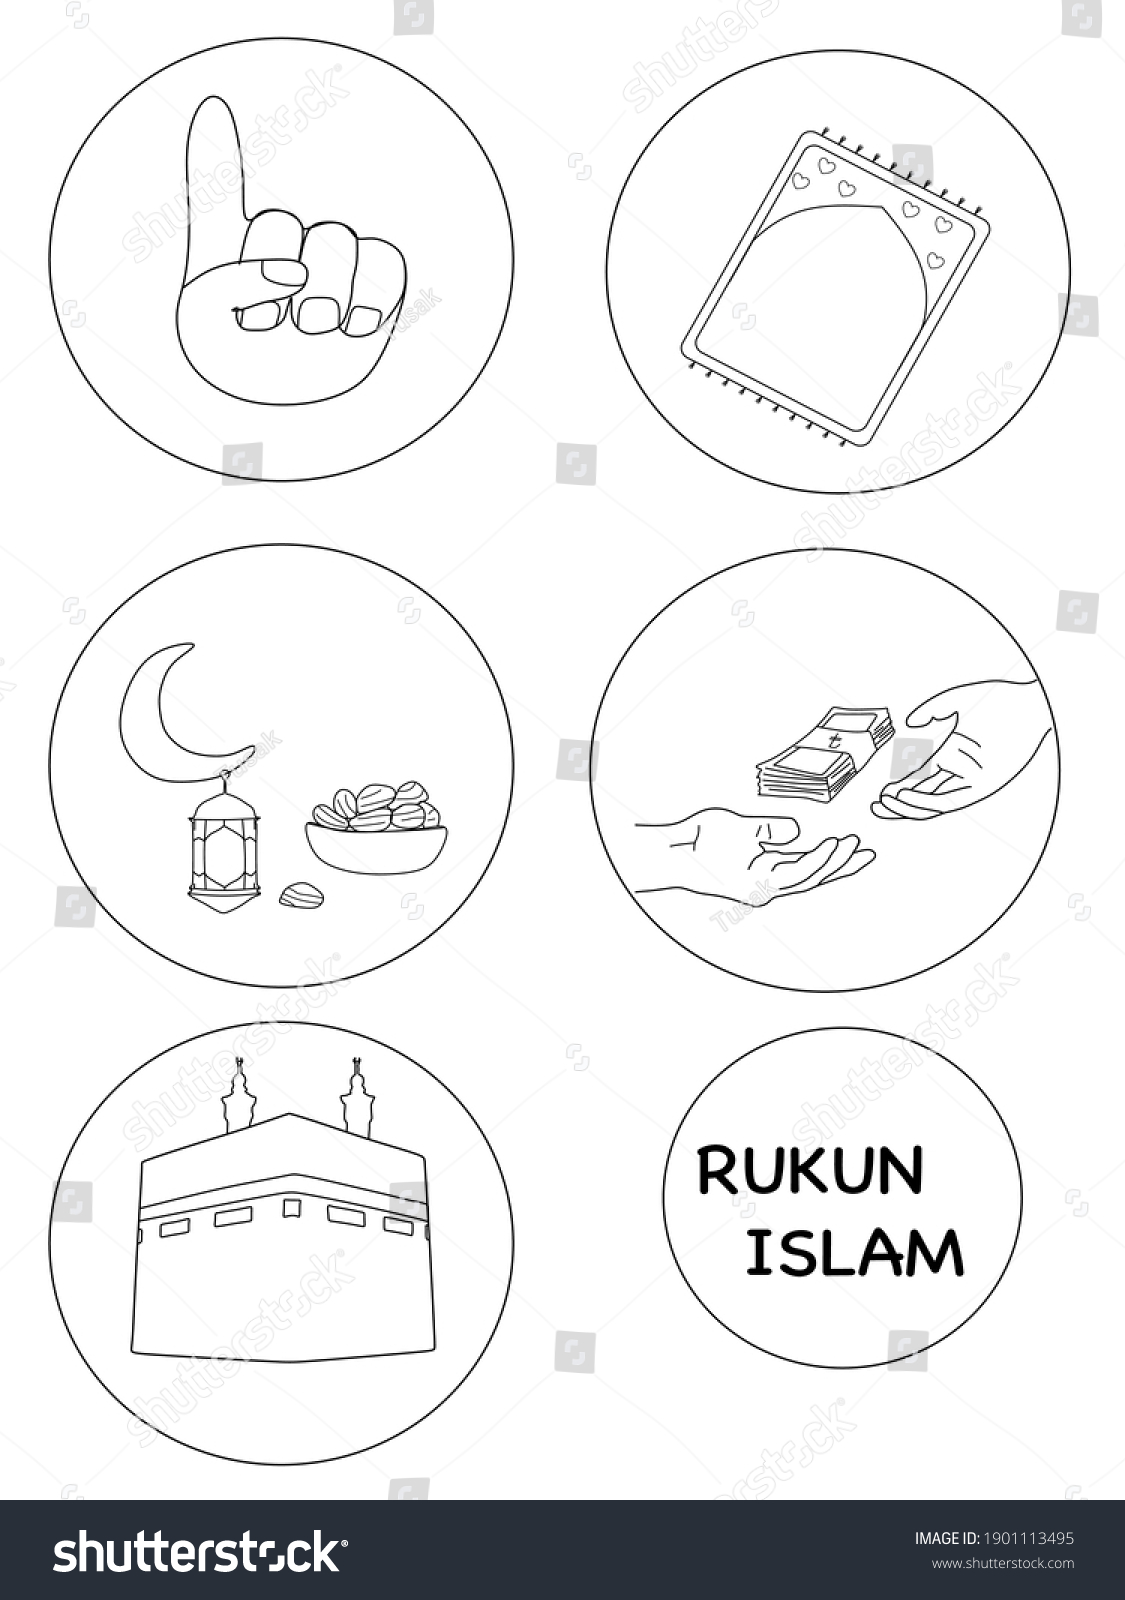 Rukun islam